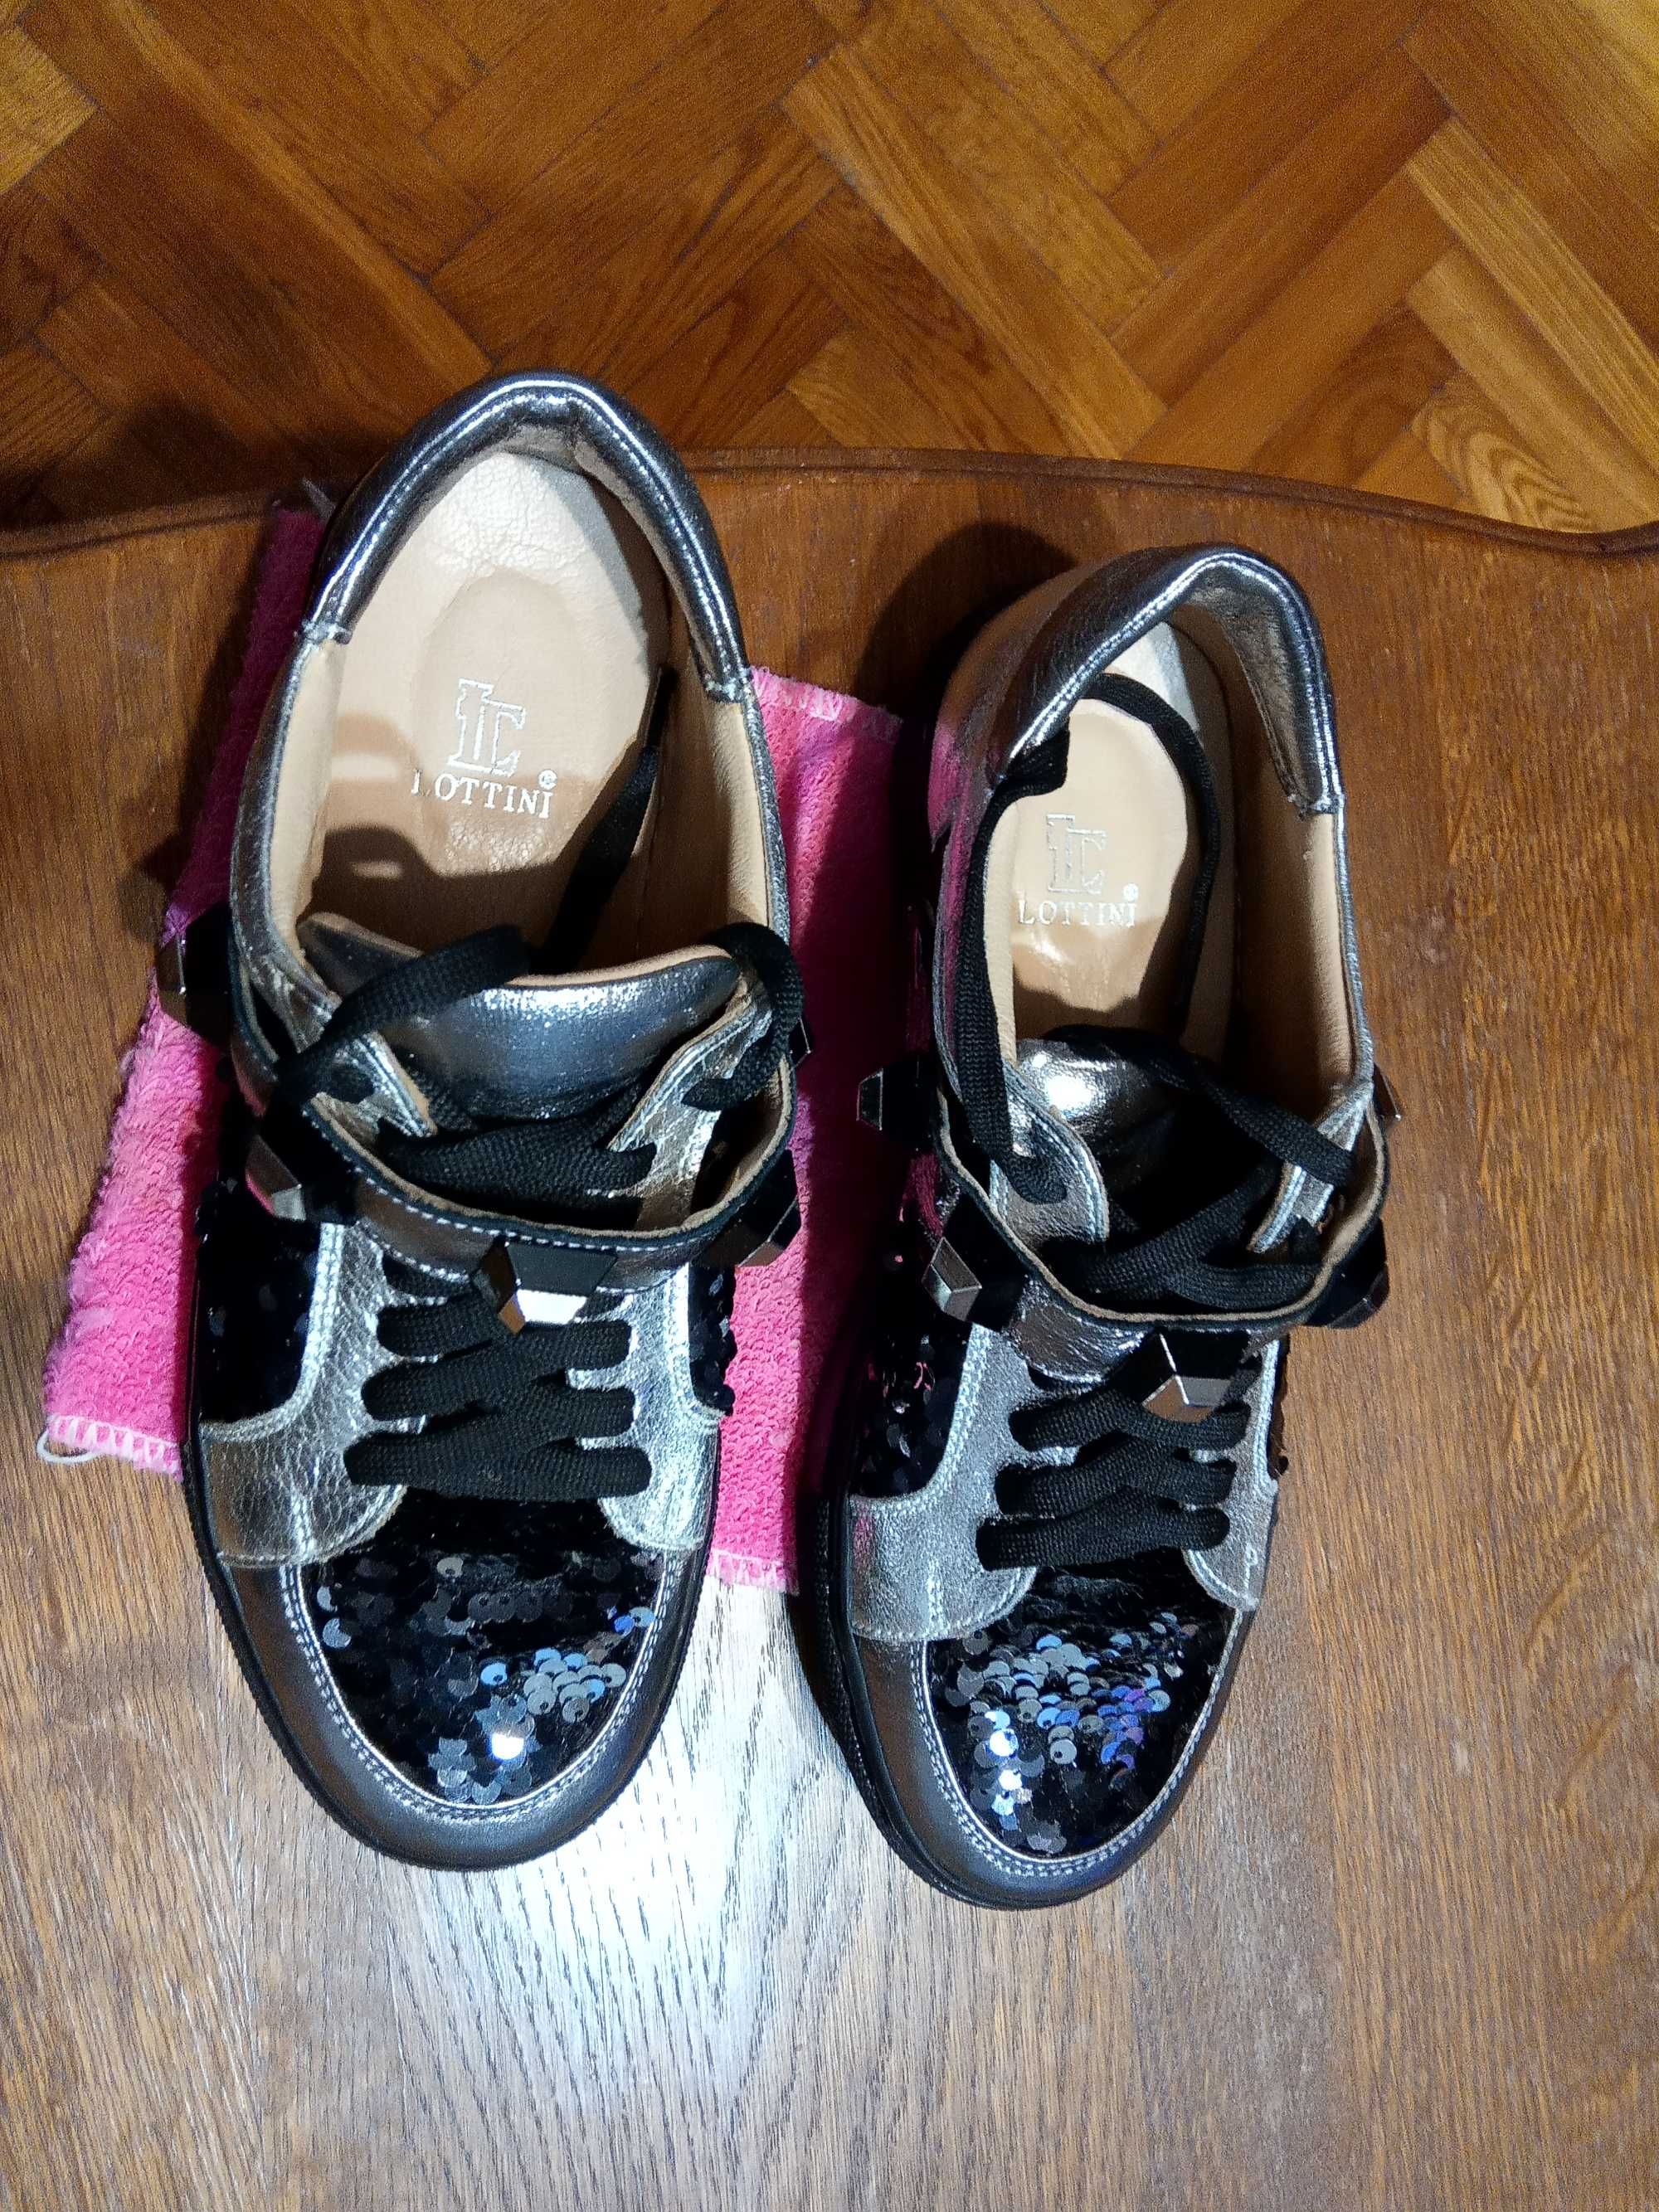 Кеды, ботинки Lottini женские с пайетками